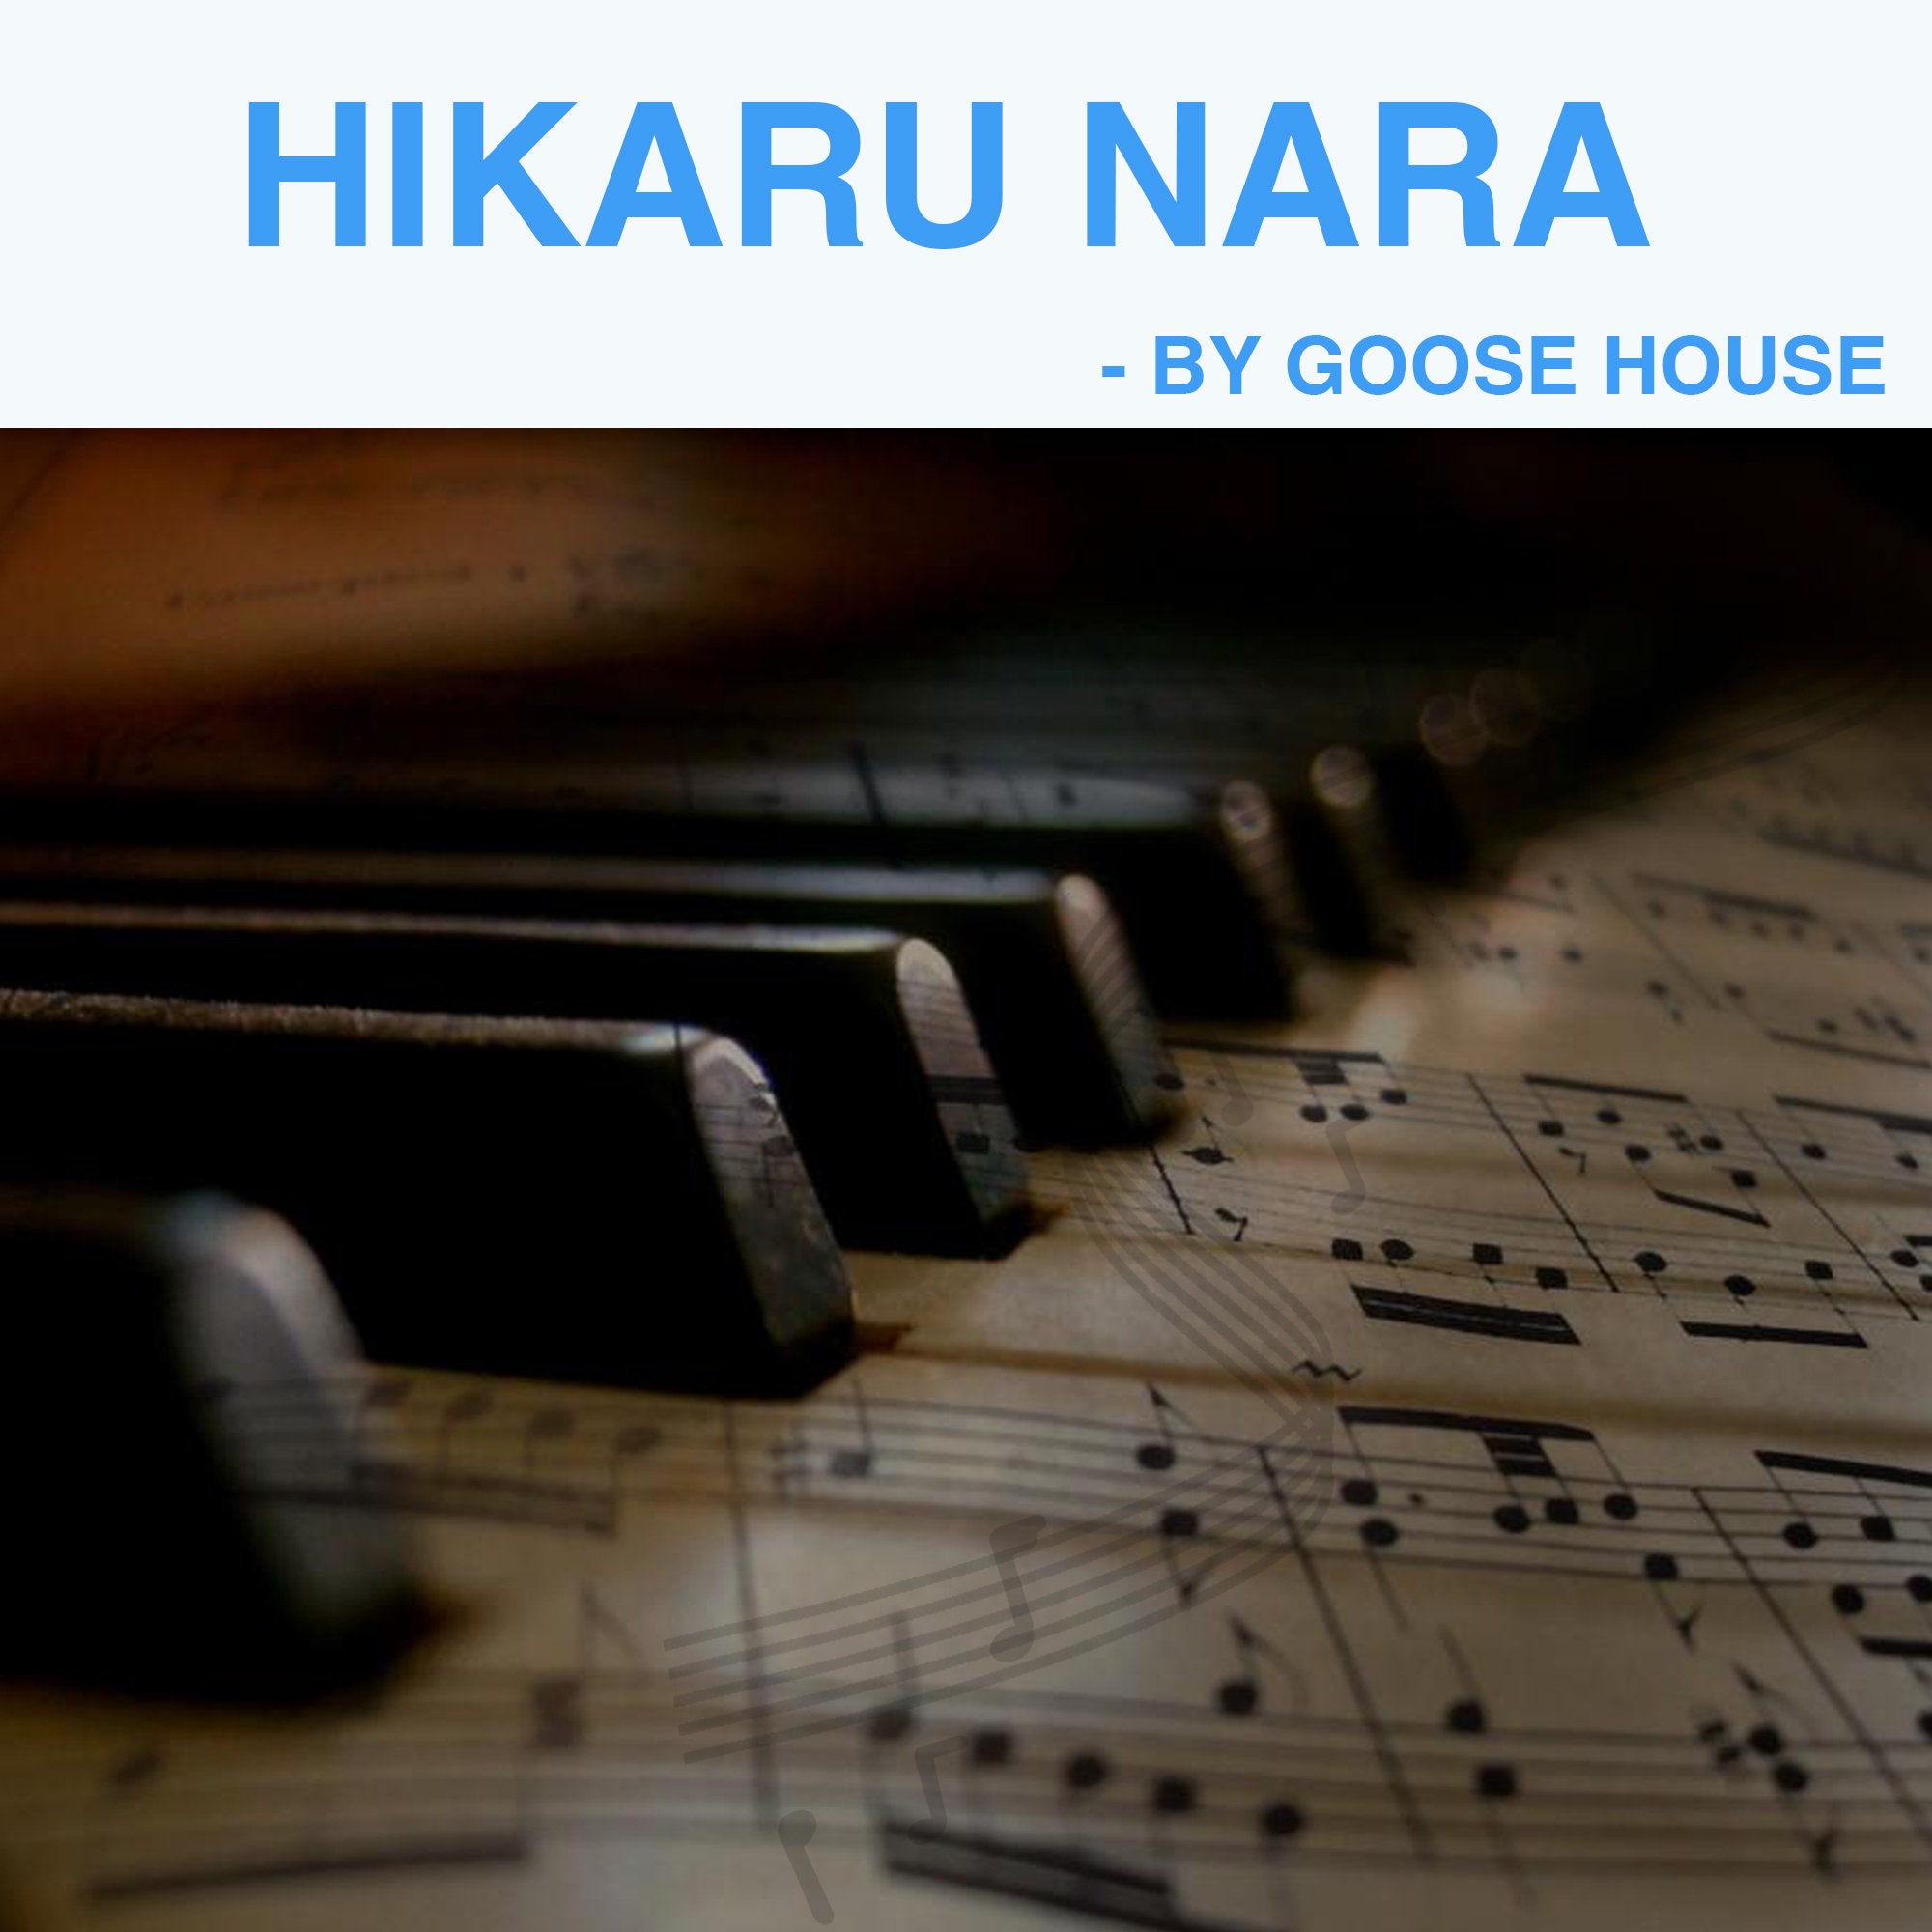 ☆ Hikaru no Go-Yuu Sheet Music pdf, - Free Score Download ☆